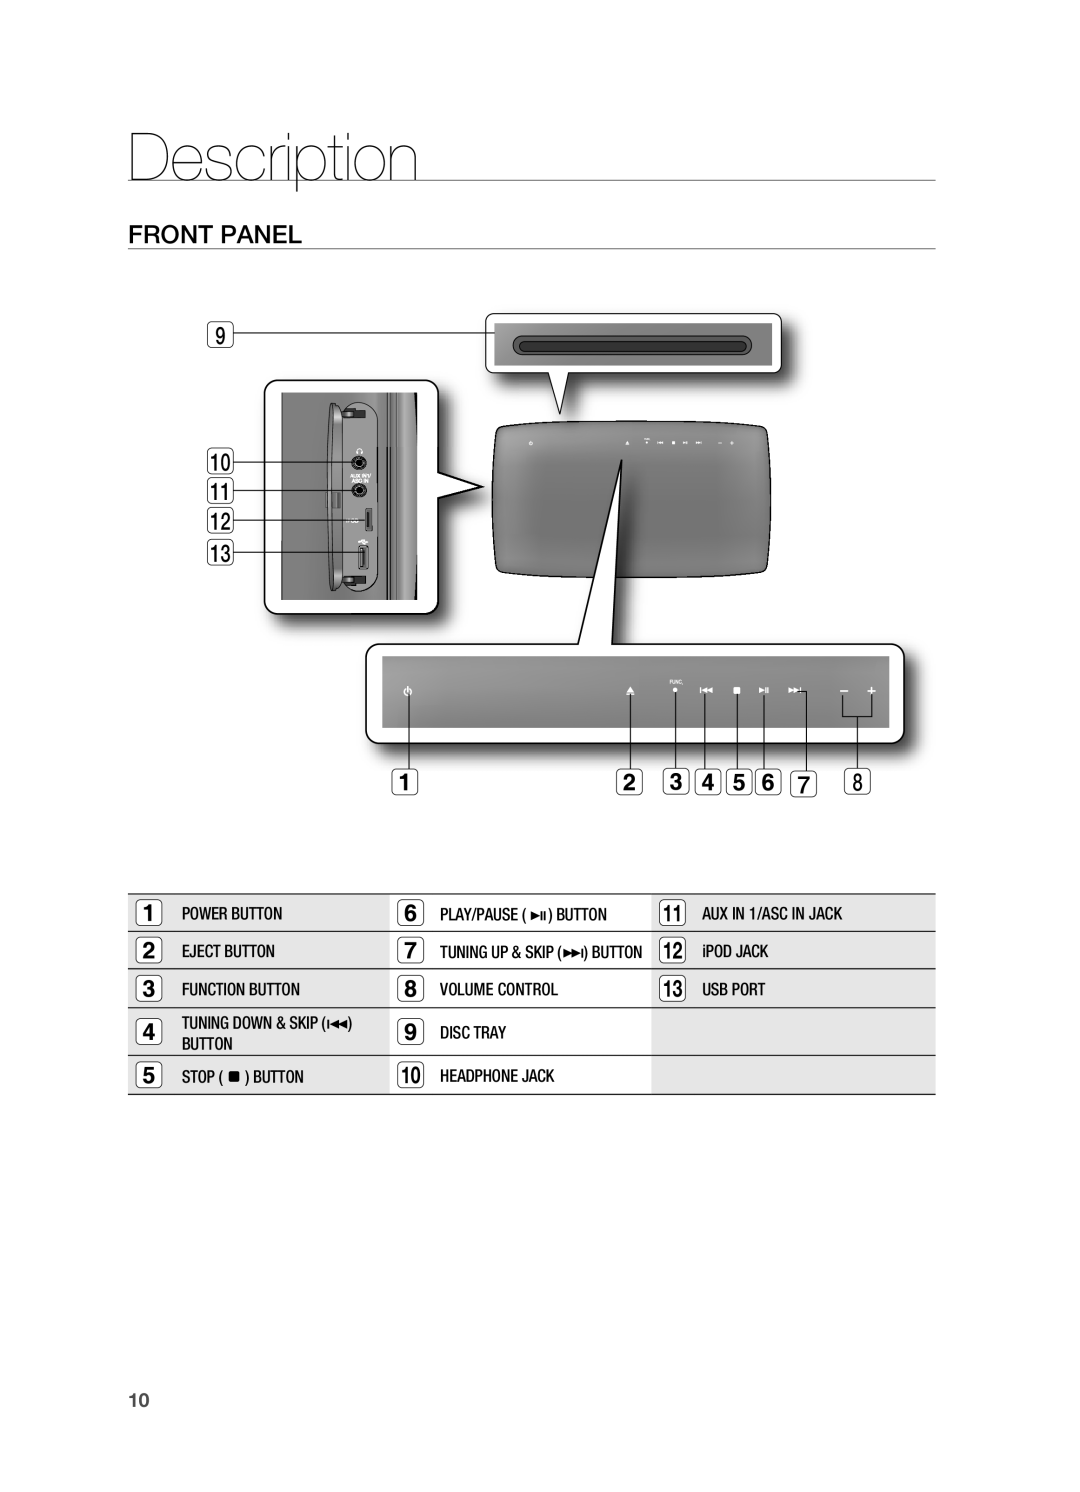 Samsung HT-TX725G, HT-X725G user manual Description, FrONT PANEL 9 10 11 12 13 7 